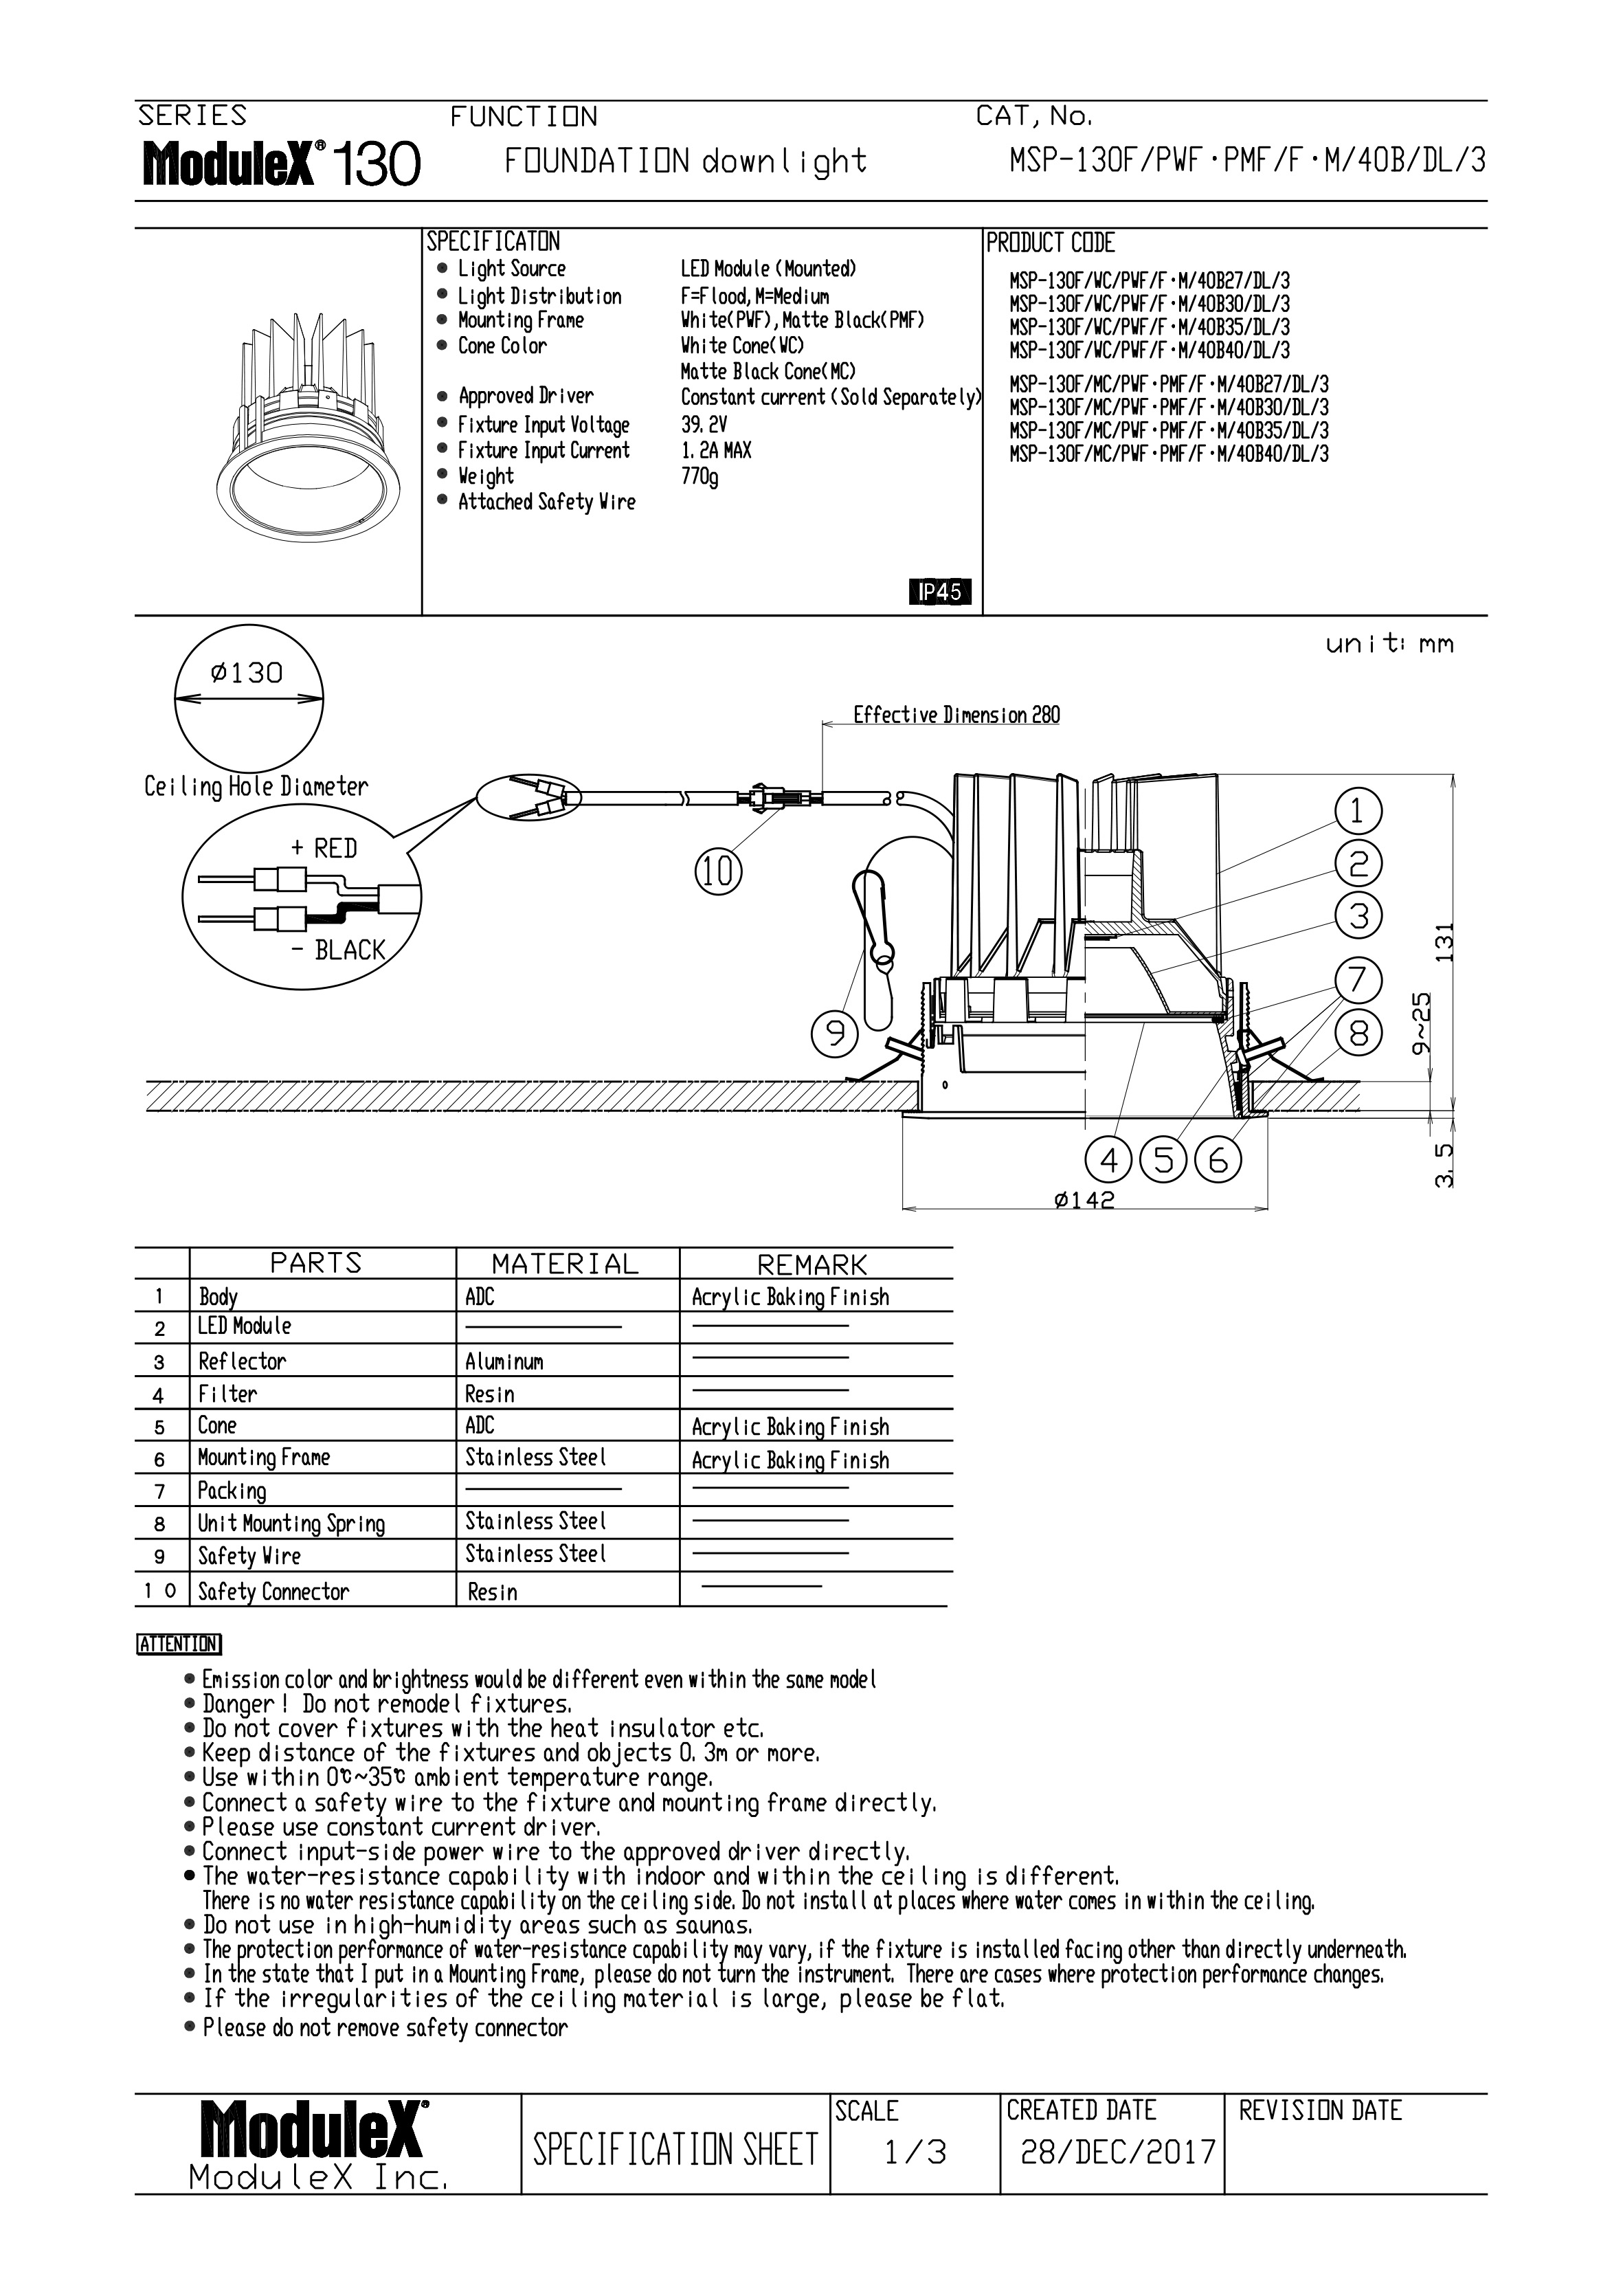 MSP-130F/P/40B Specification Sheet